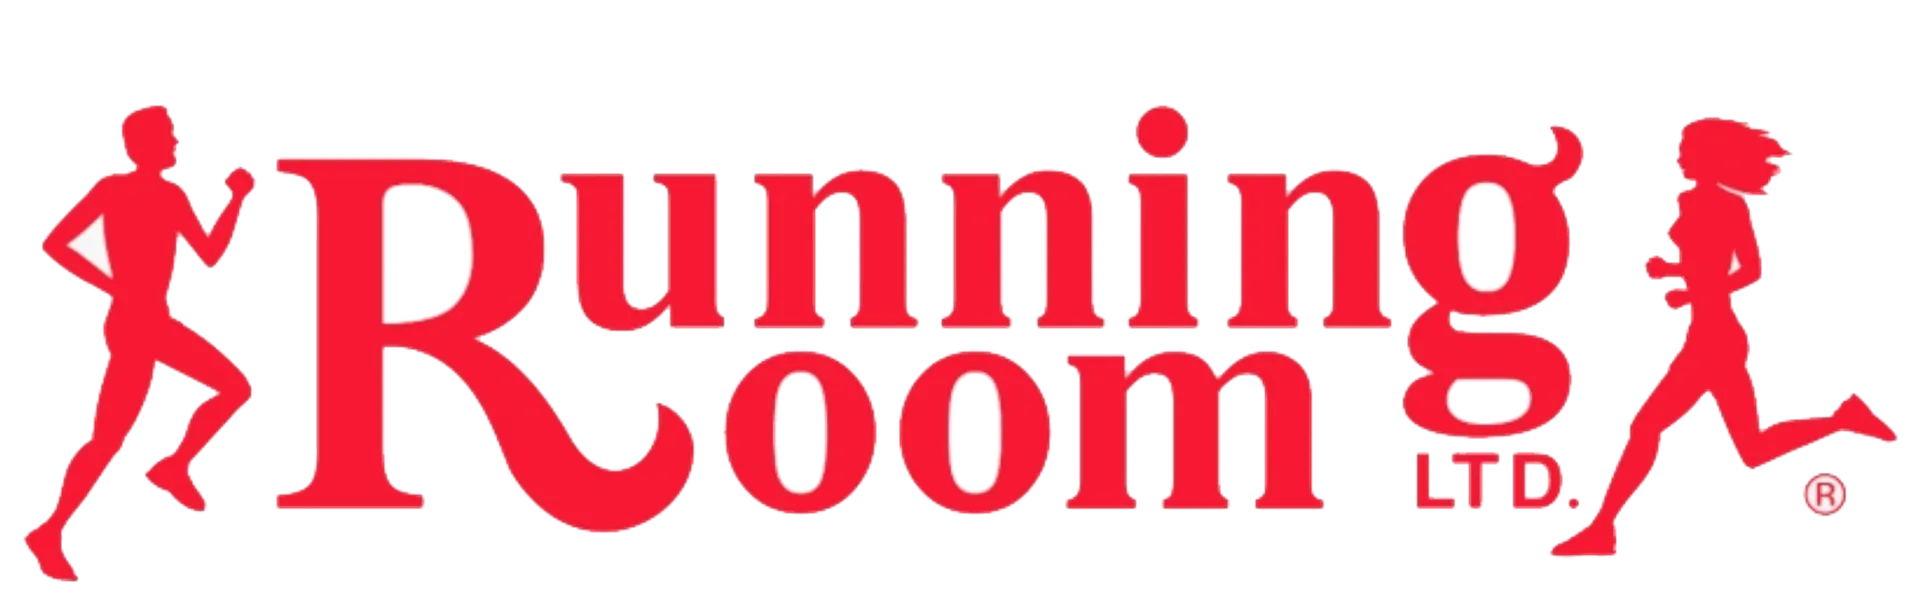 RUNNING ROOM logo de circulaire